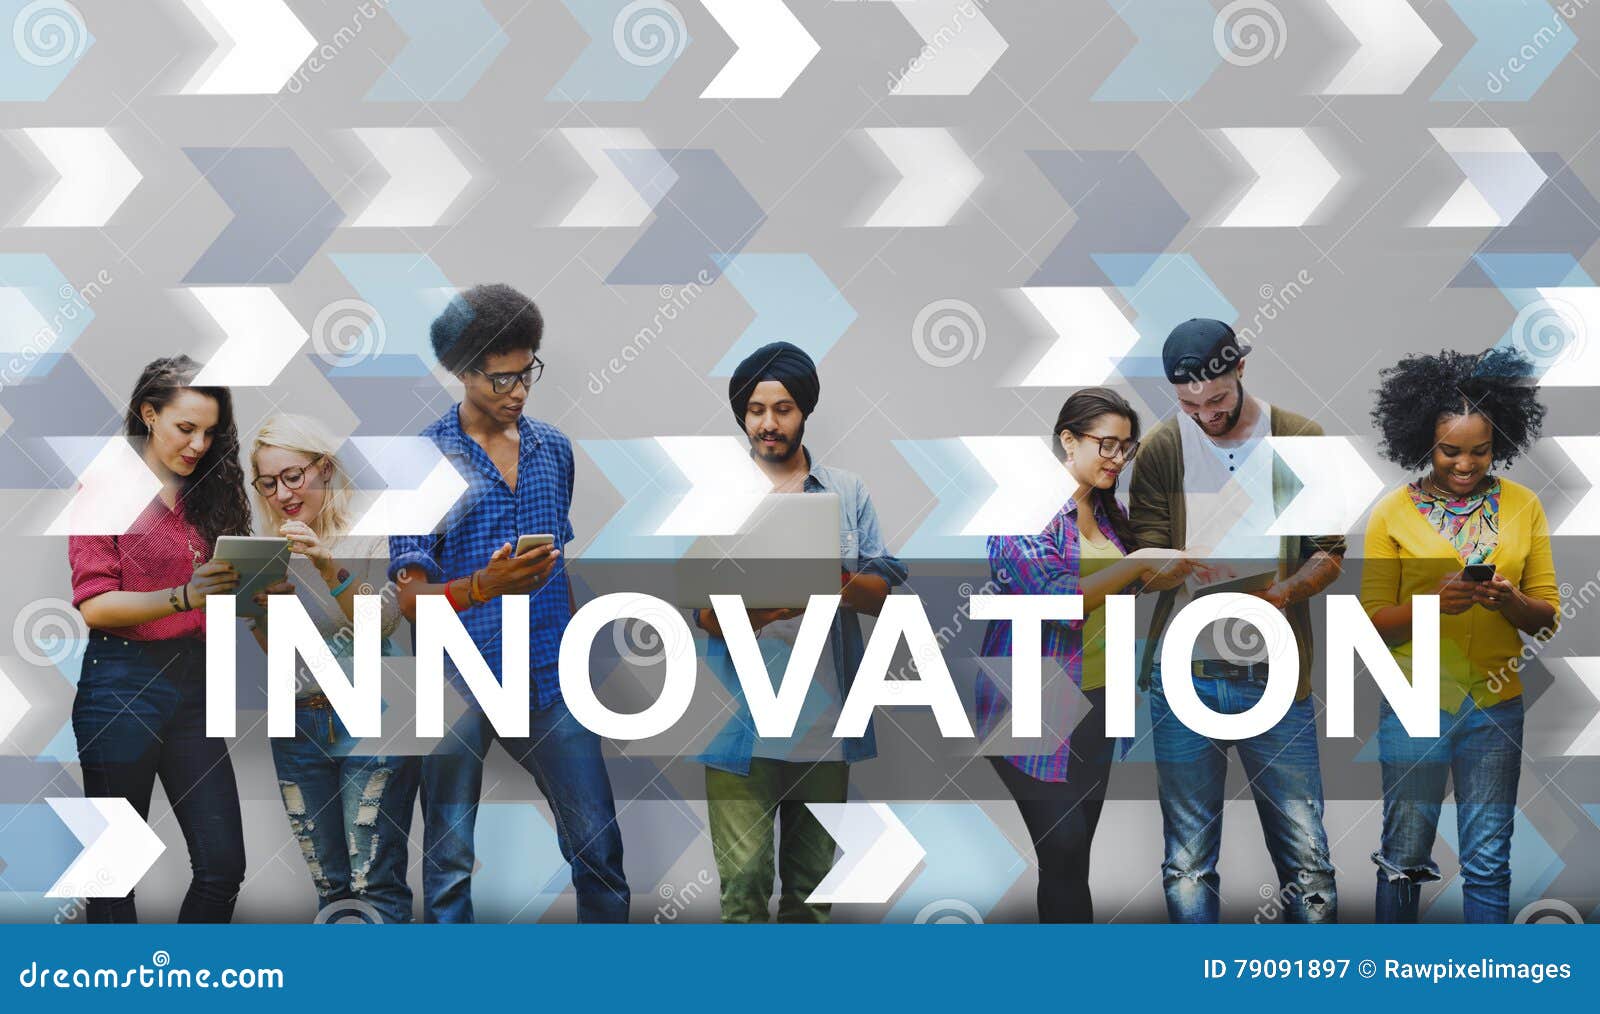 innovation innovate invention development  concept